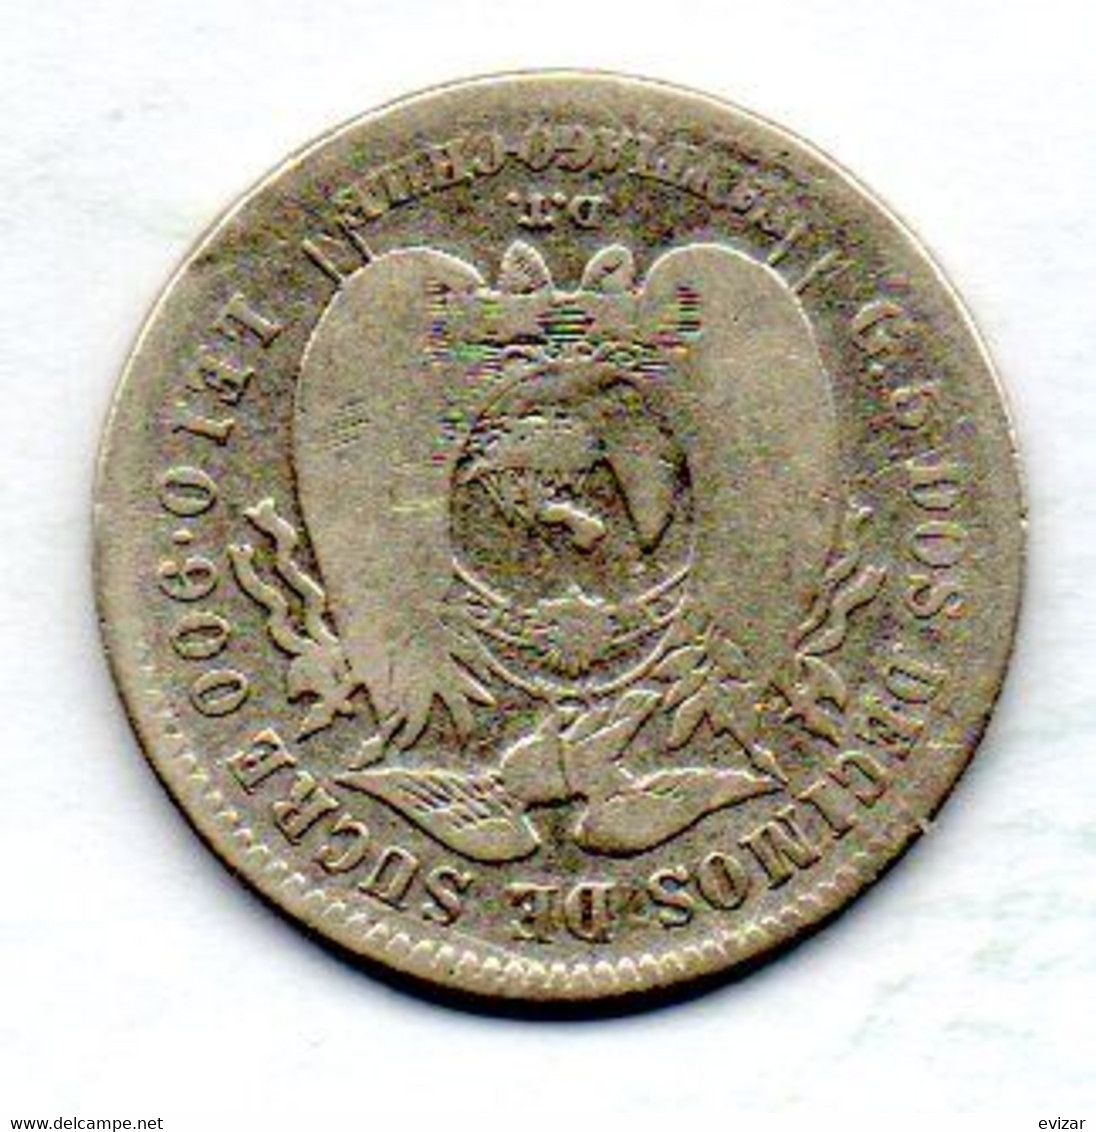 ECUADOR, 2 Decimos, Silver, Year 1889, KM #51.2 - Ecuador